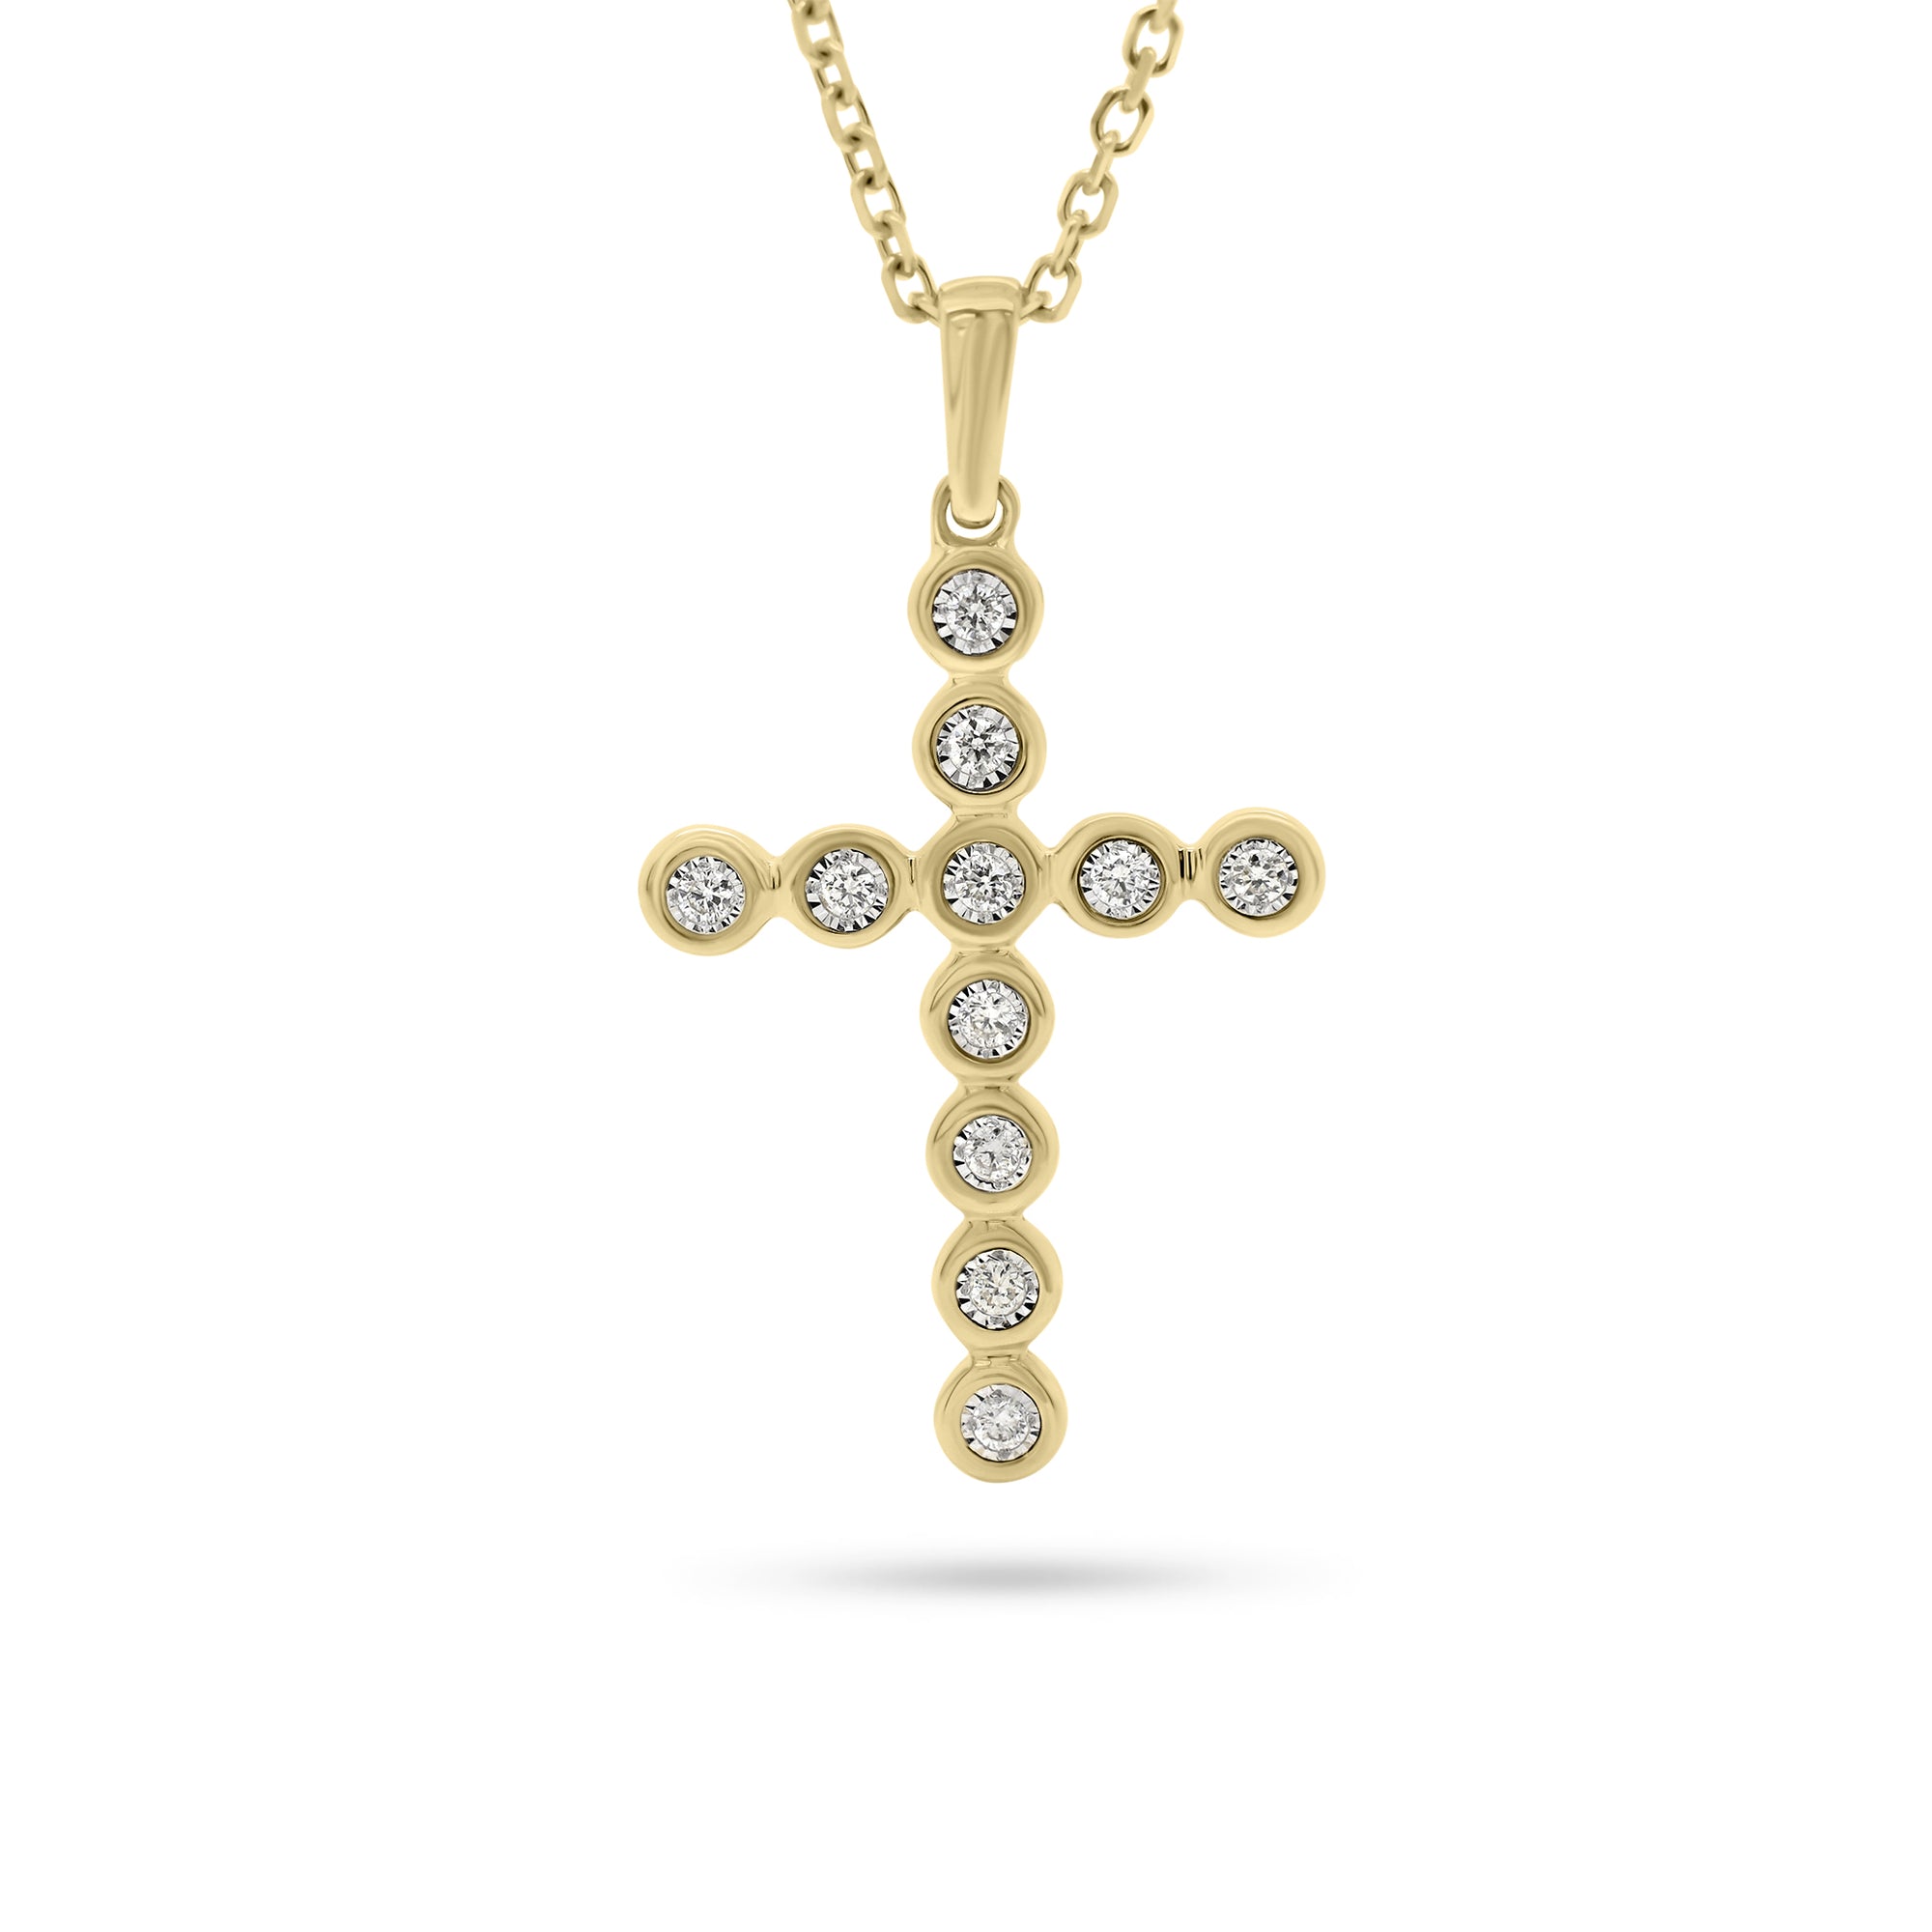 Bezel-Set Diamond Cross Pendant  - 14K gold weighing 2.34 grams  - 11 round diamonds totaling 0.07 carats